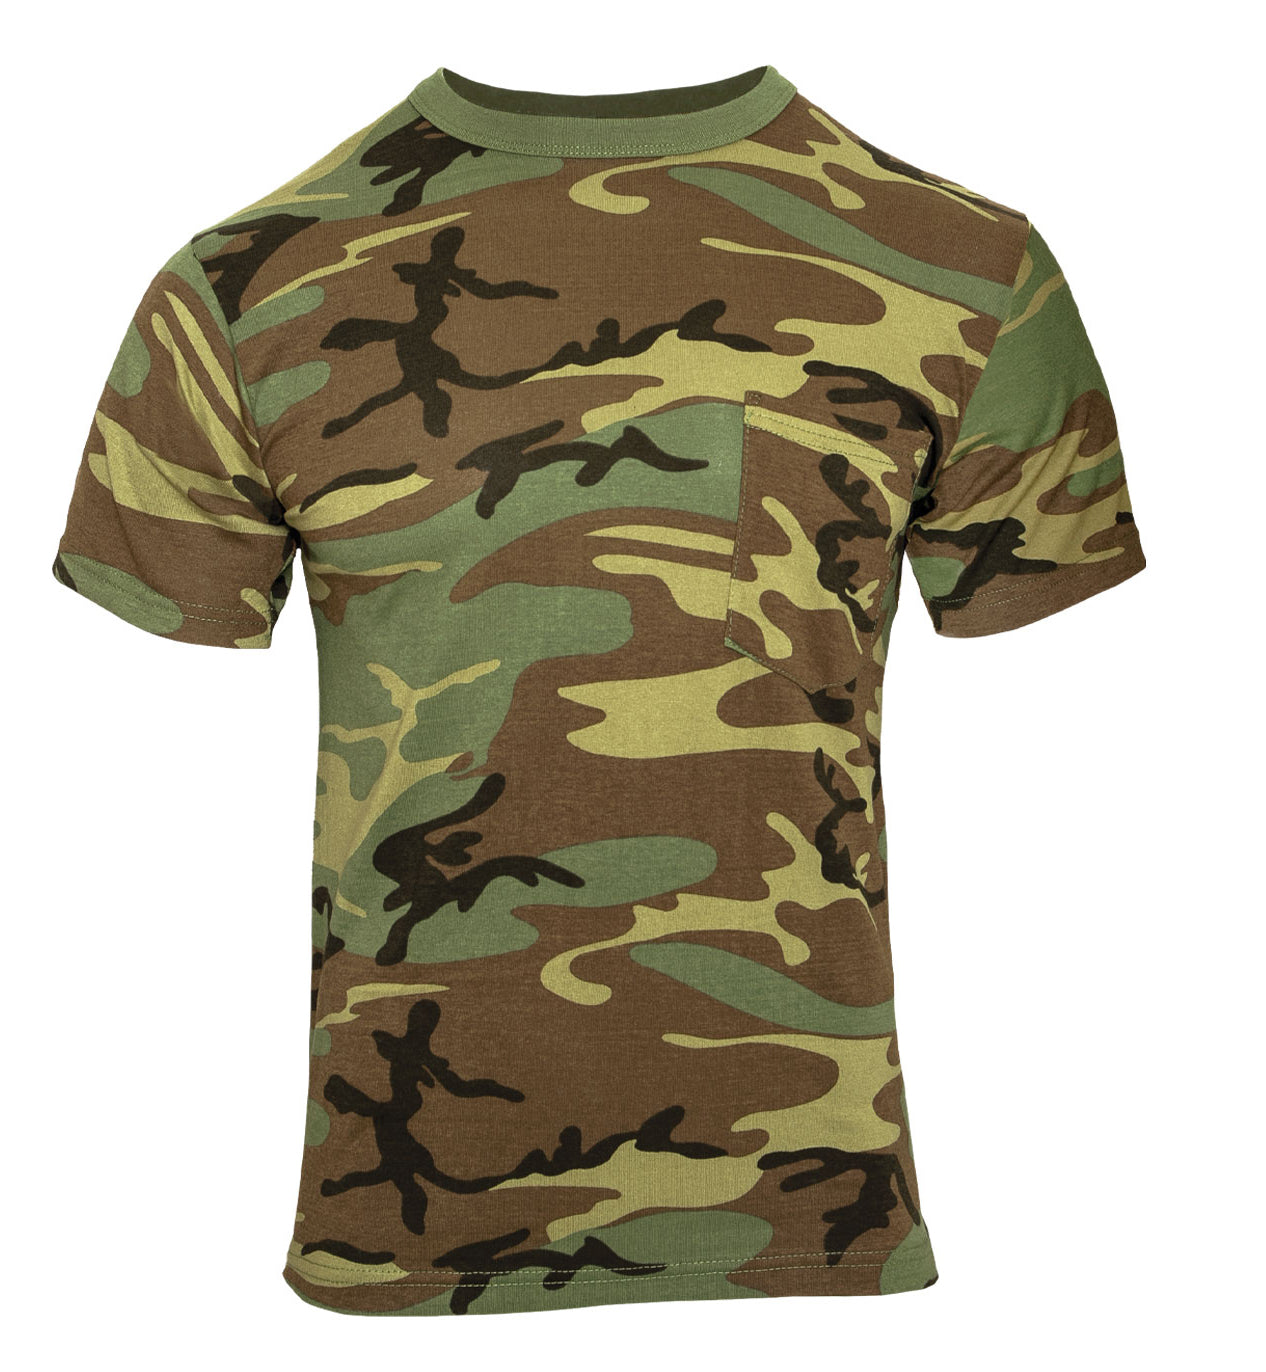 Rothco Woodland Camo T-Shirt with Pocket